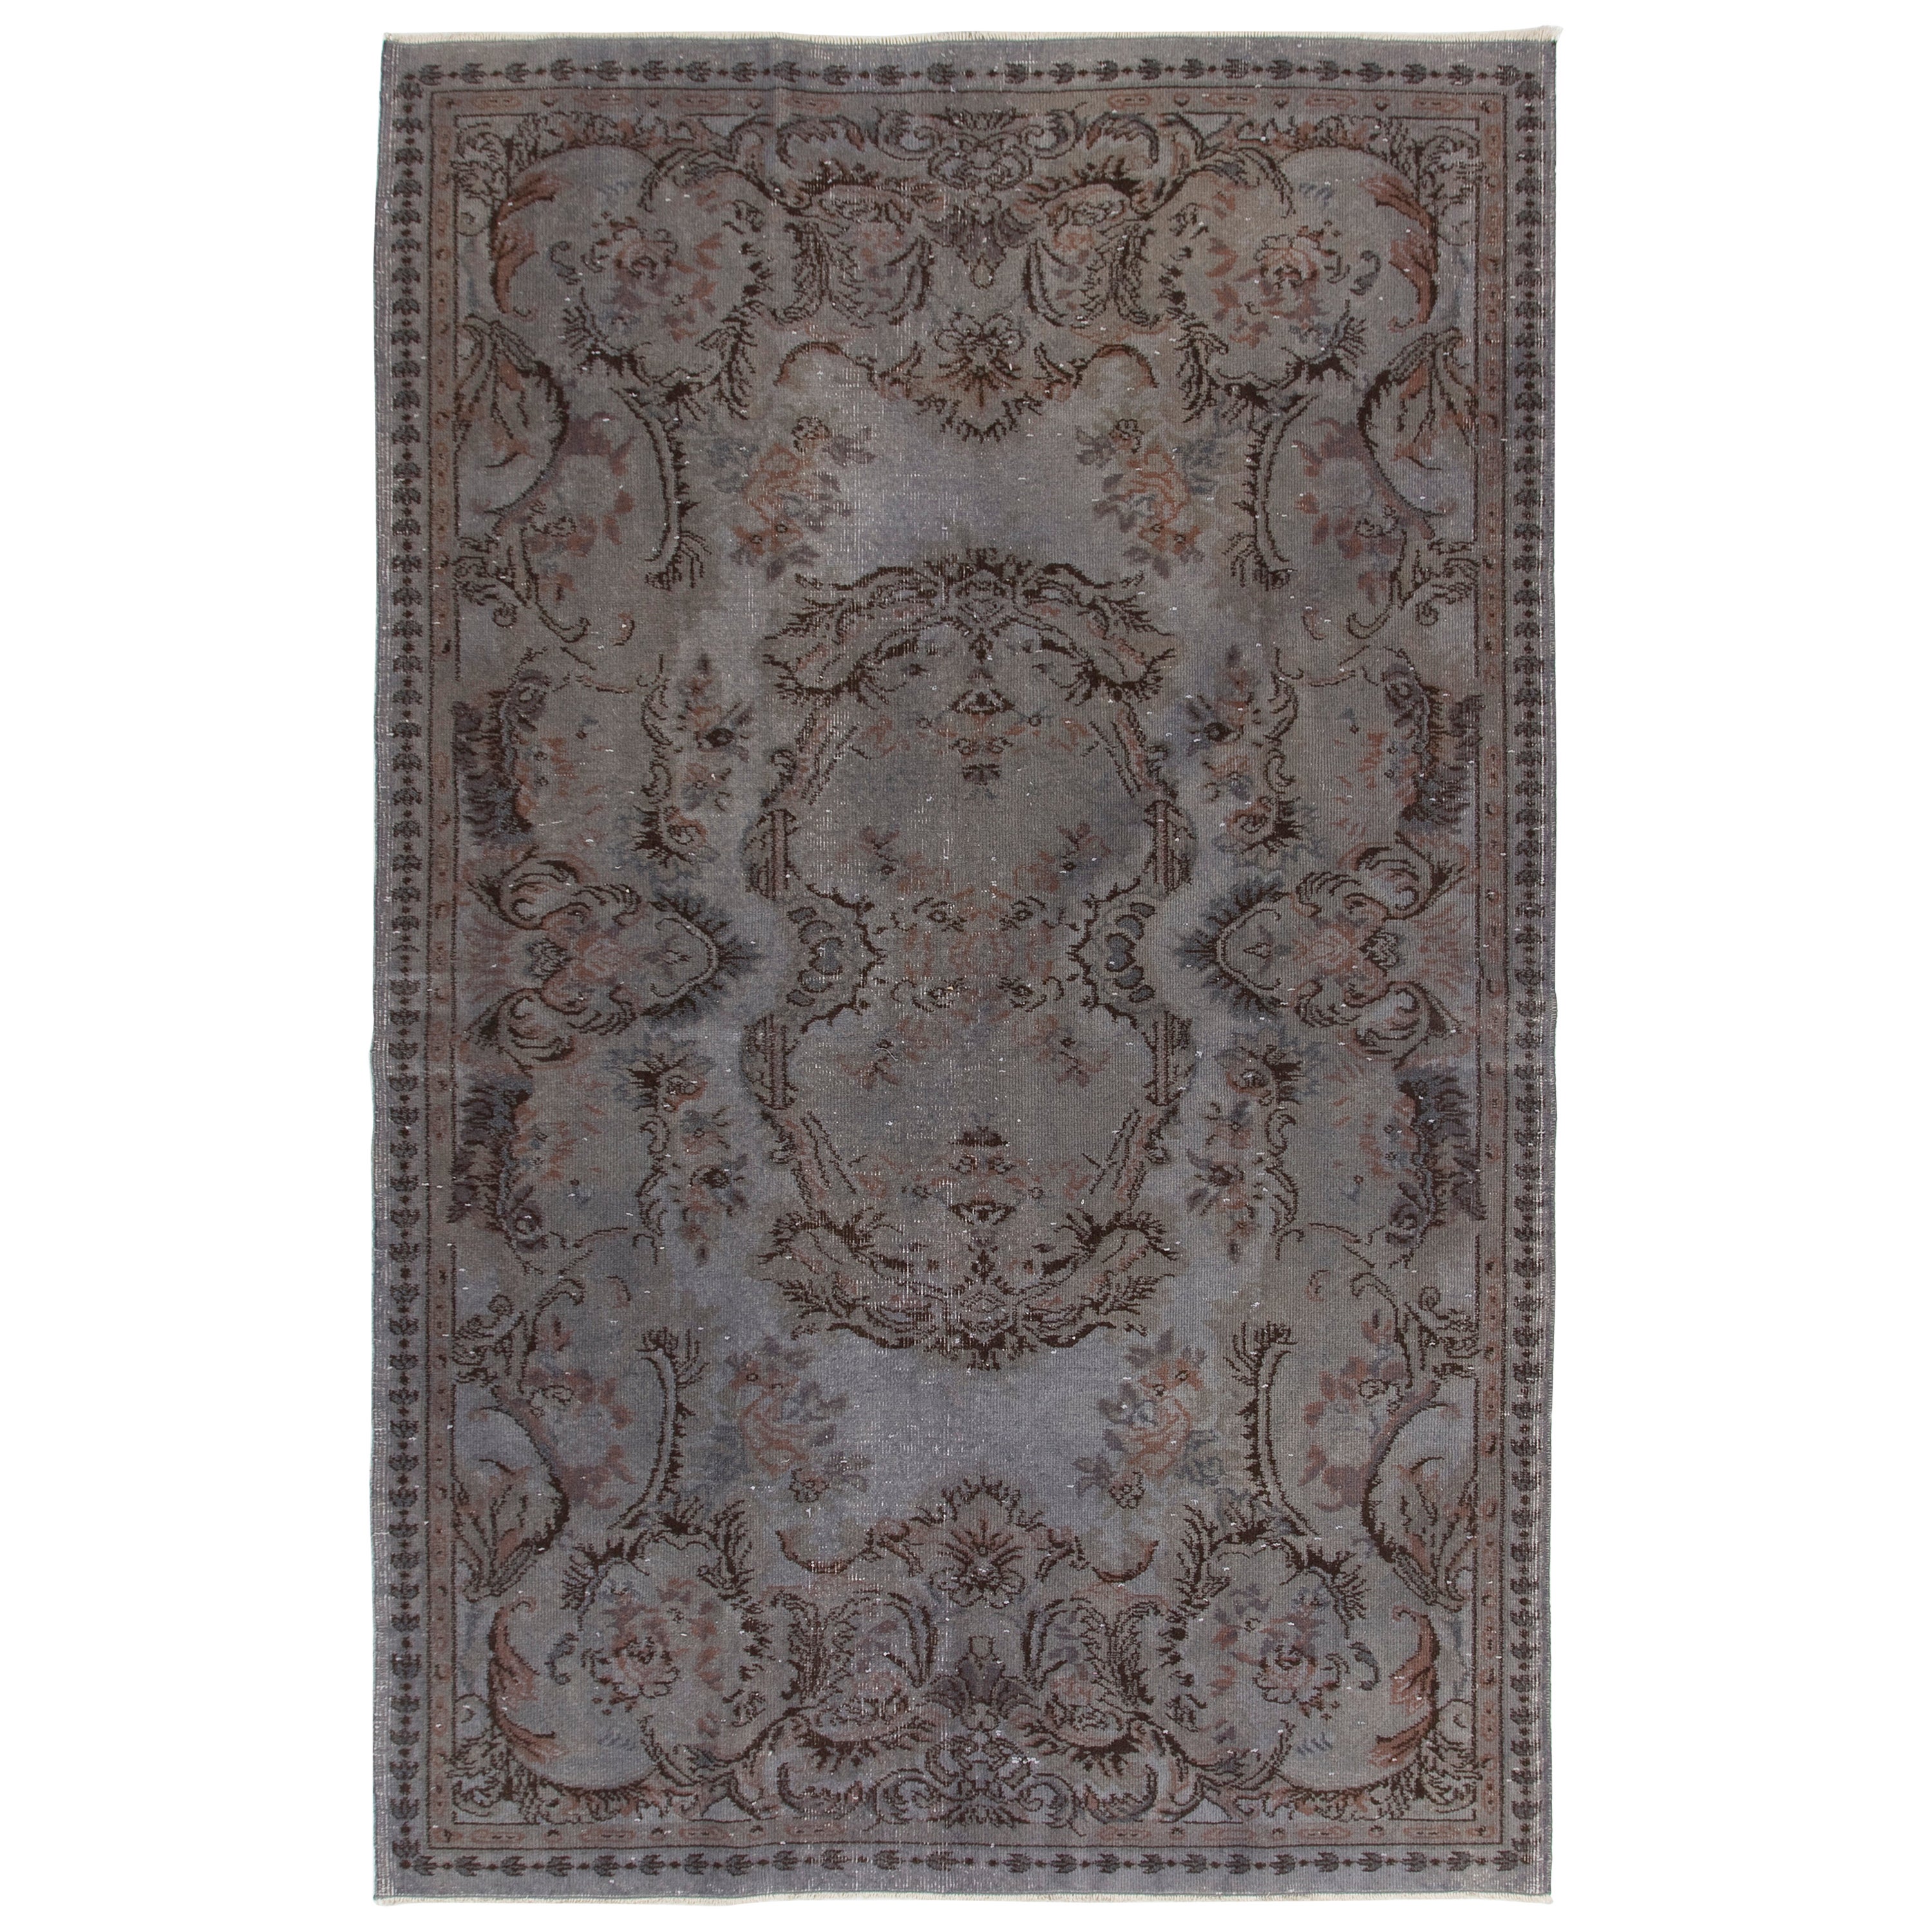 5.4x8.5 Ft French-Aubusson Inspired Turkish Rug, Gray Modern Handmade Carpet (Tapis turc d'inspiration aubussonnaise, gris)